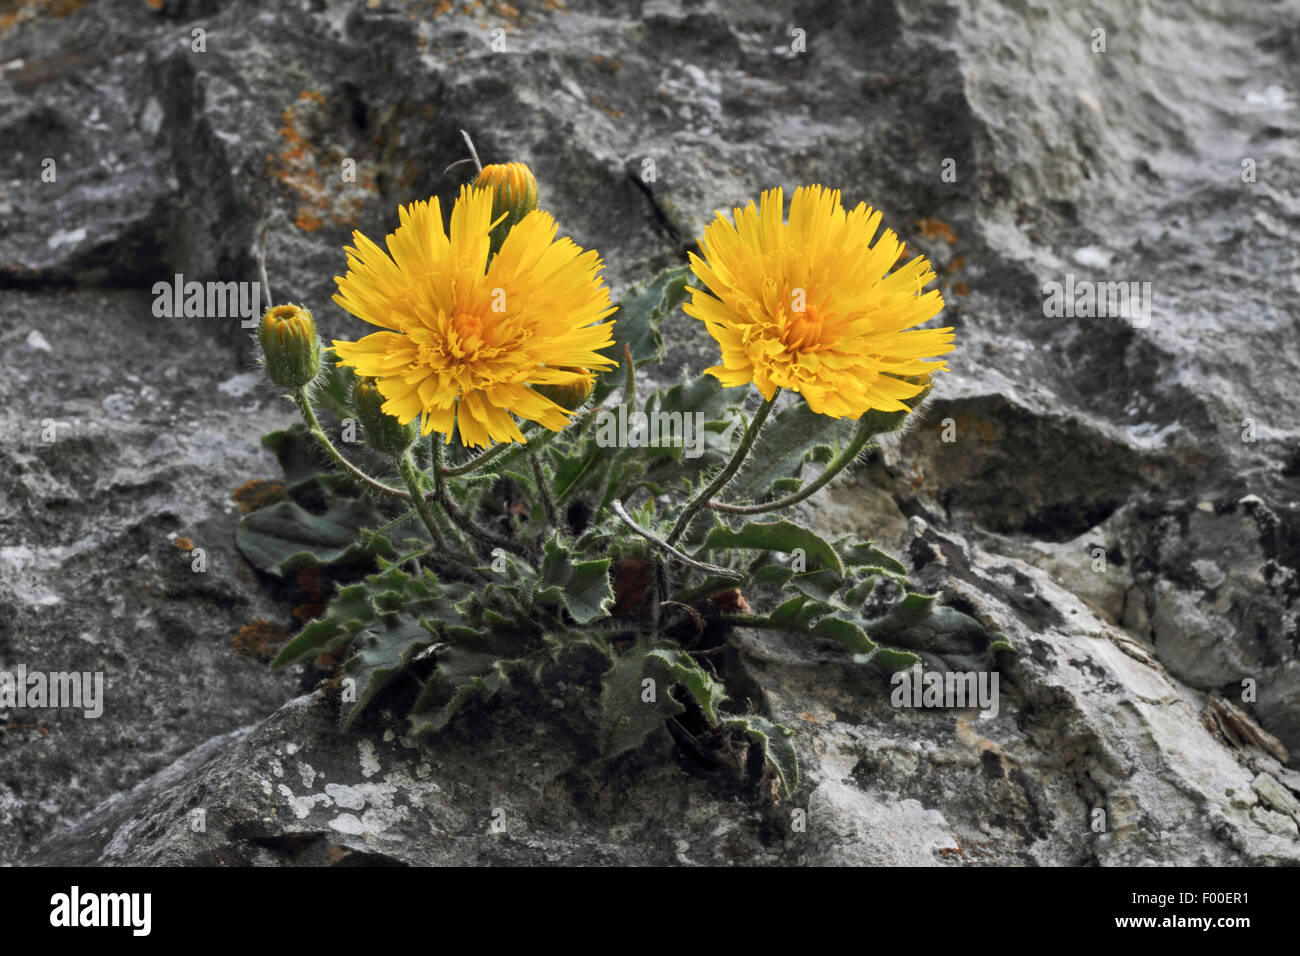 Dawarf hawkweed (Hieracium humile), blooming between rocks, Germany Stock Photo